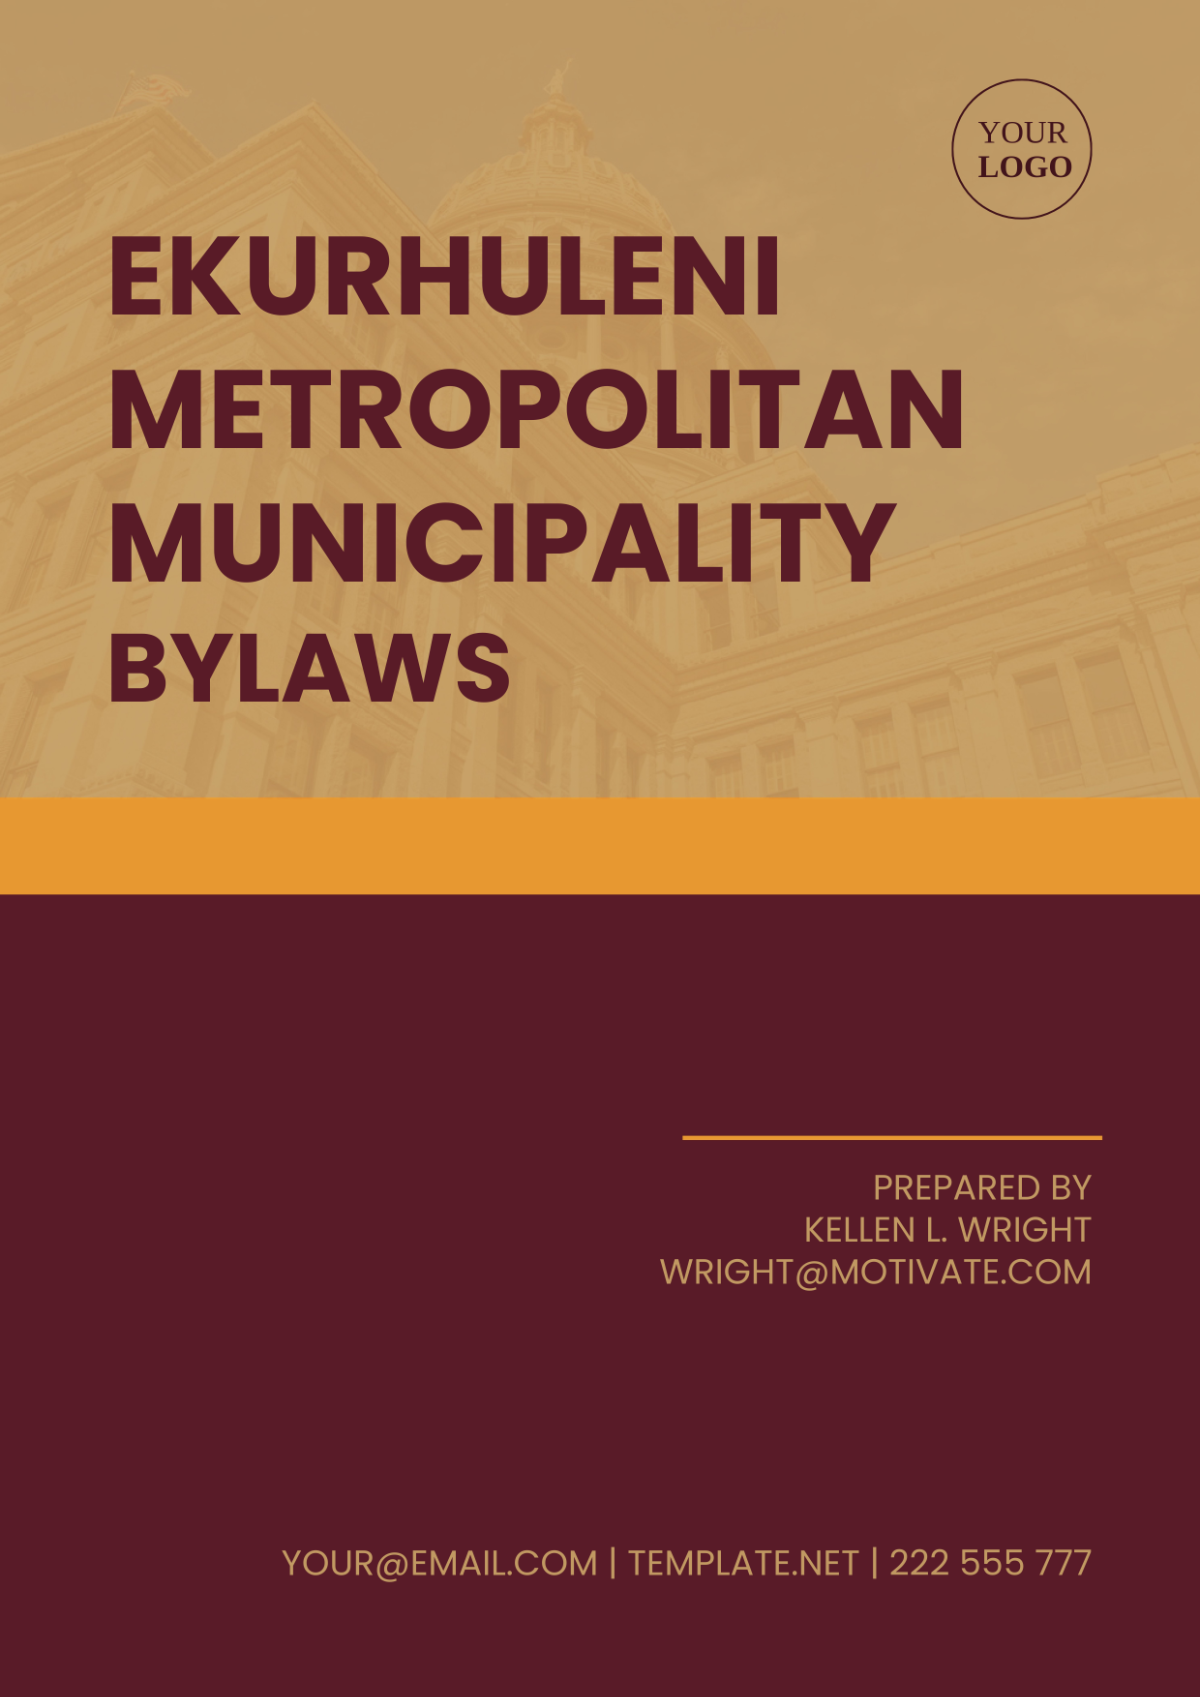 Ekurhuleni Metropolitan Municipality Bylaws Template